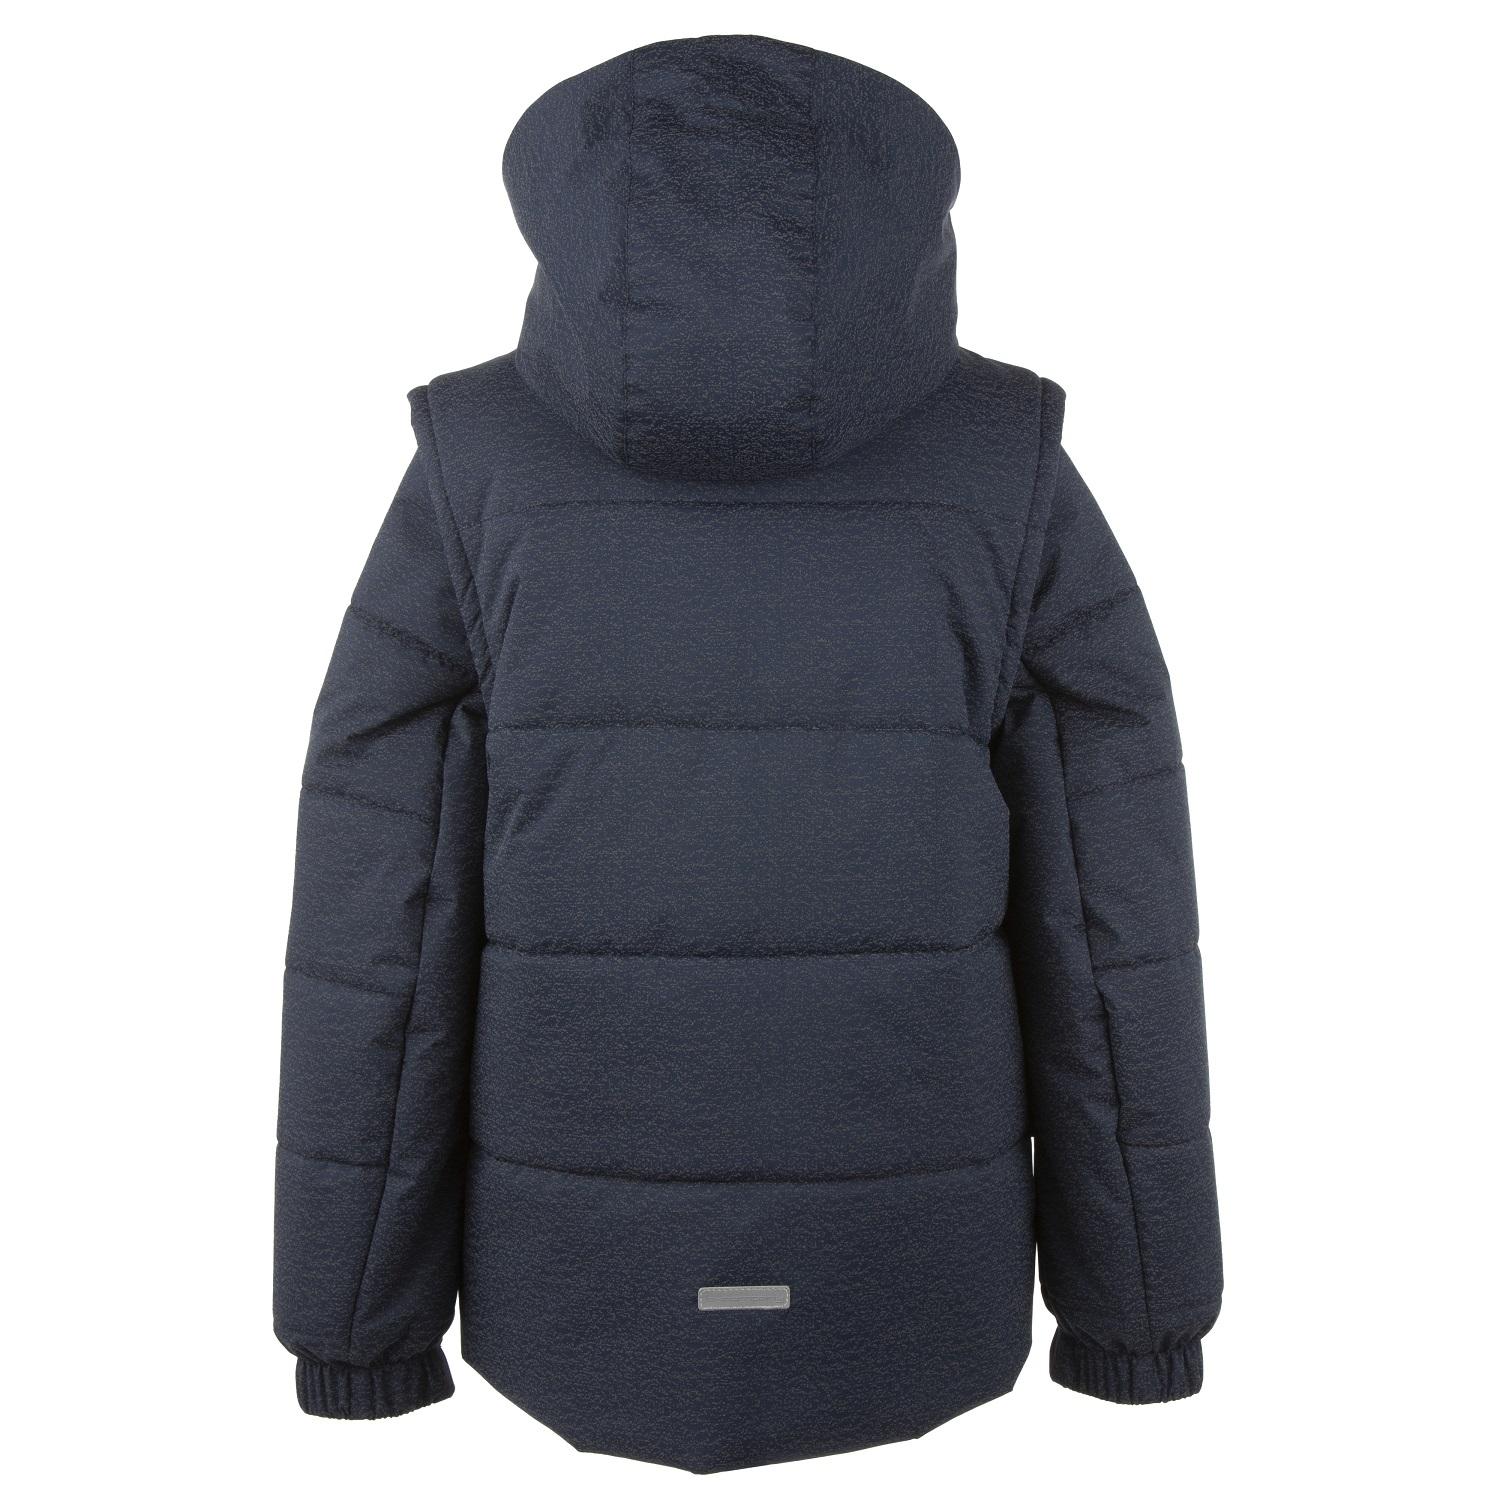 Зимняя куртка для мальчика Scout (20366/2291), Lenne (Le-company)